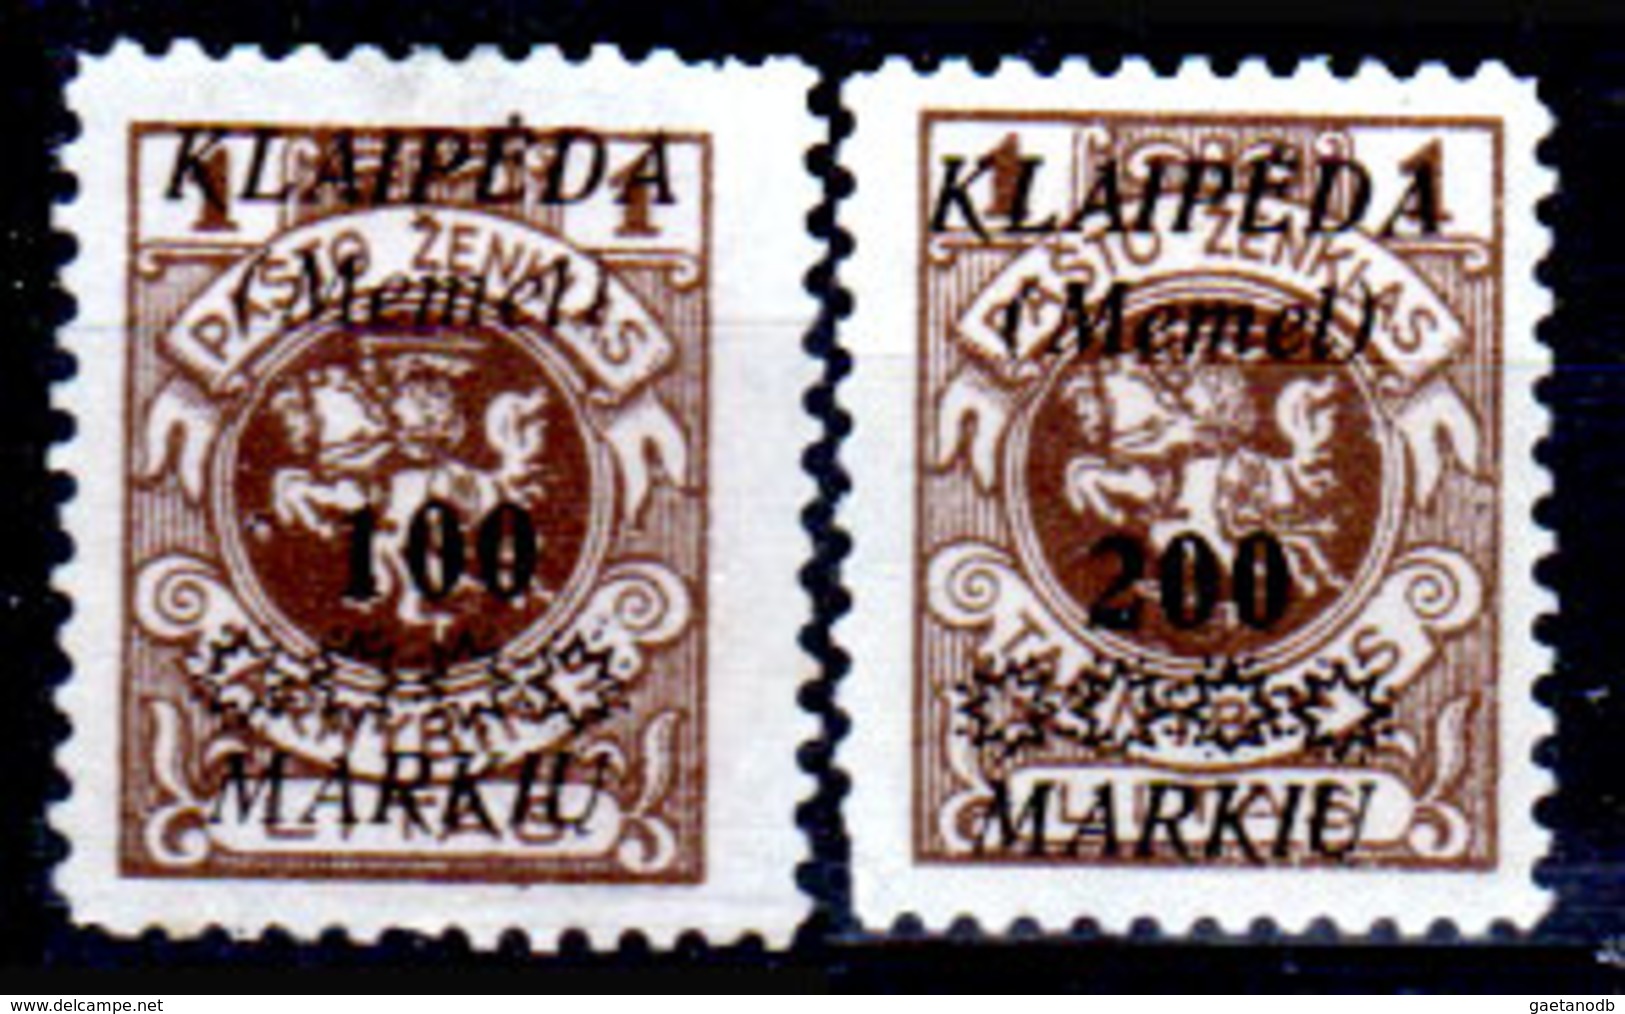 Memel-024 - Emissione 1923 (o) Used - Senza Difetti Occulti.) - Used Stamps